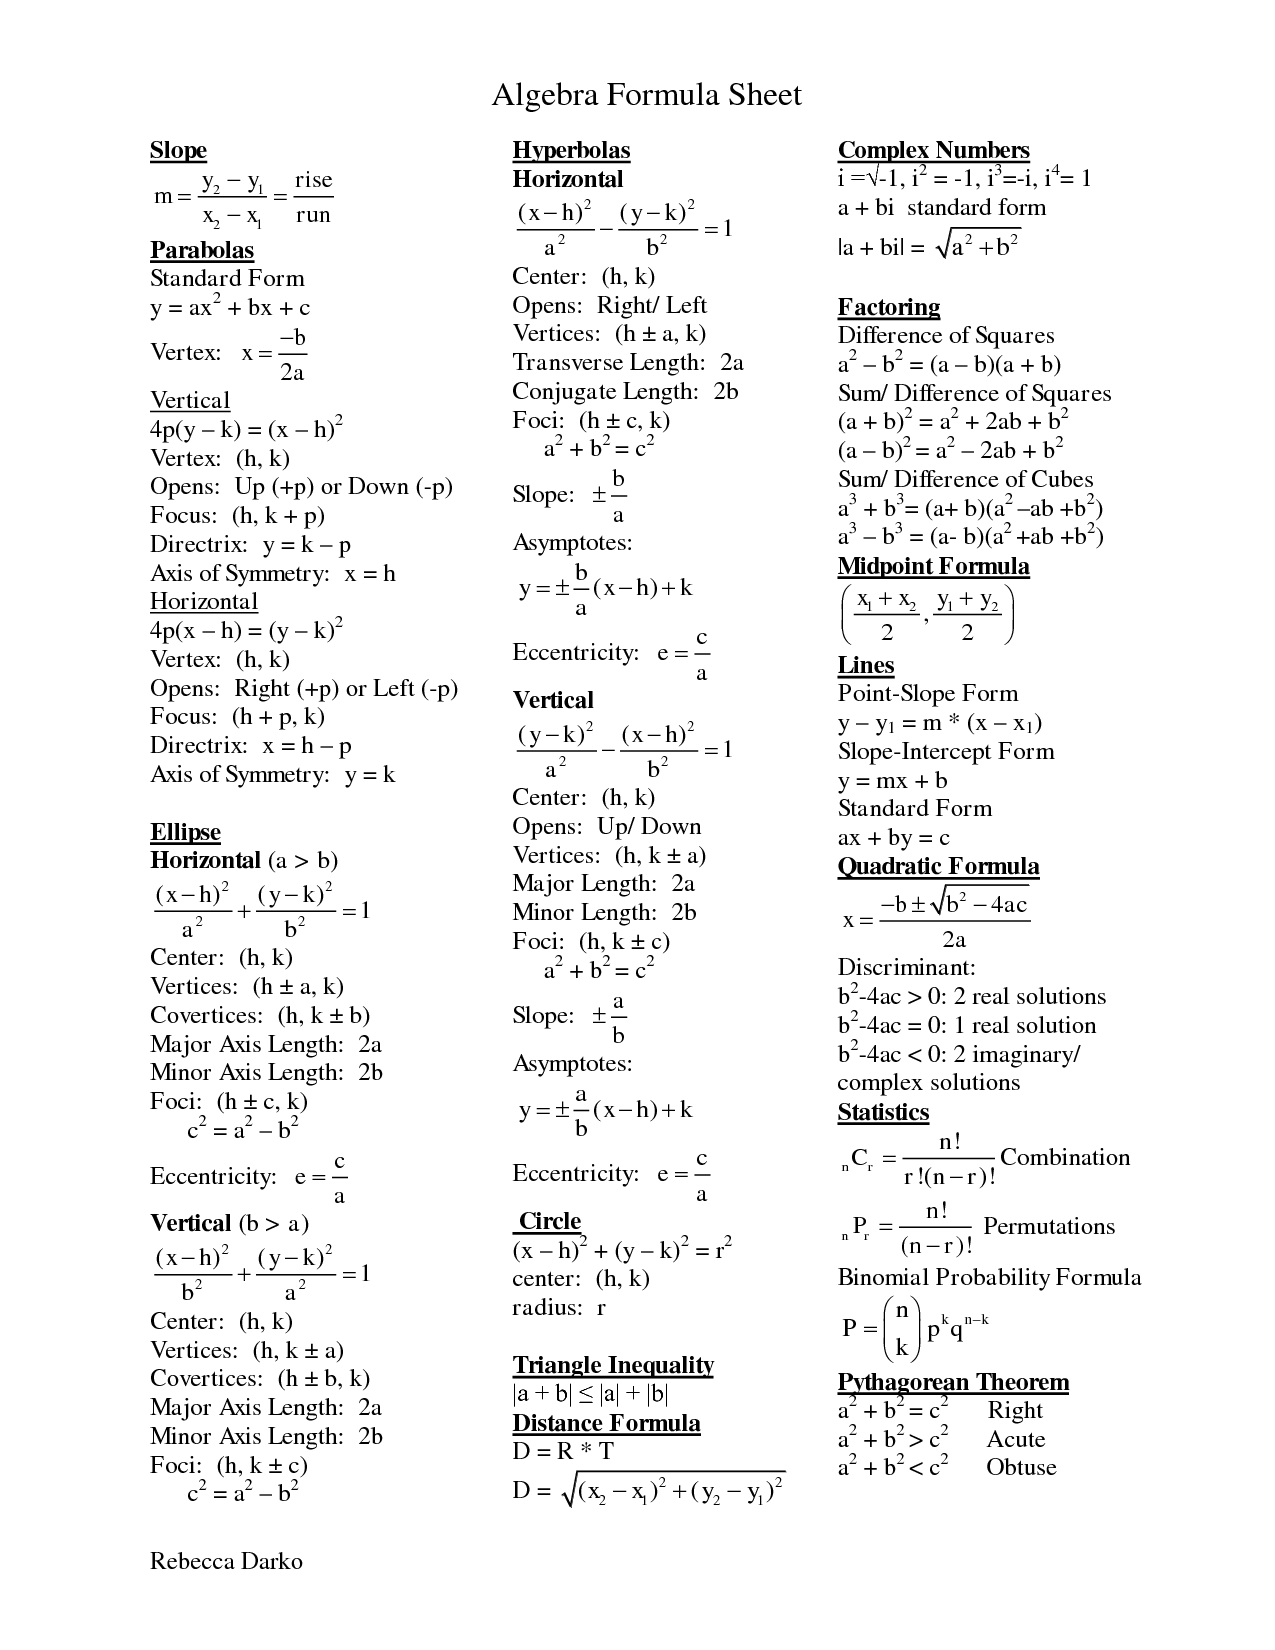 file-algebra-formula-sheet-png-thealmightyguru